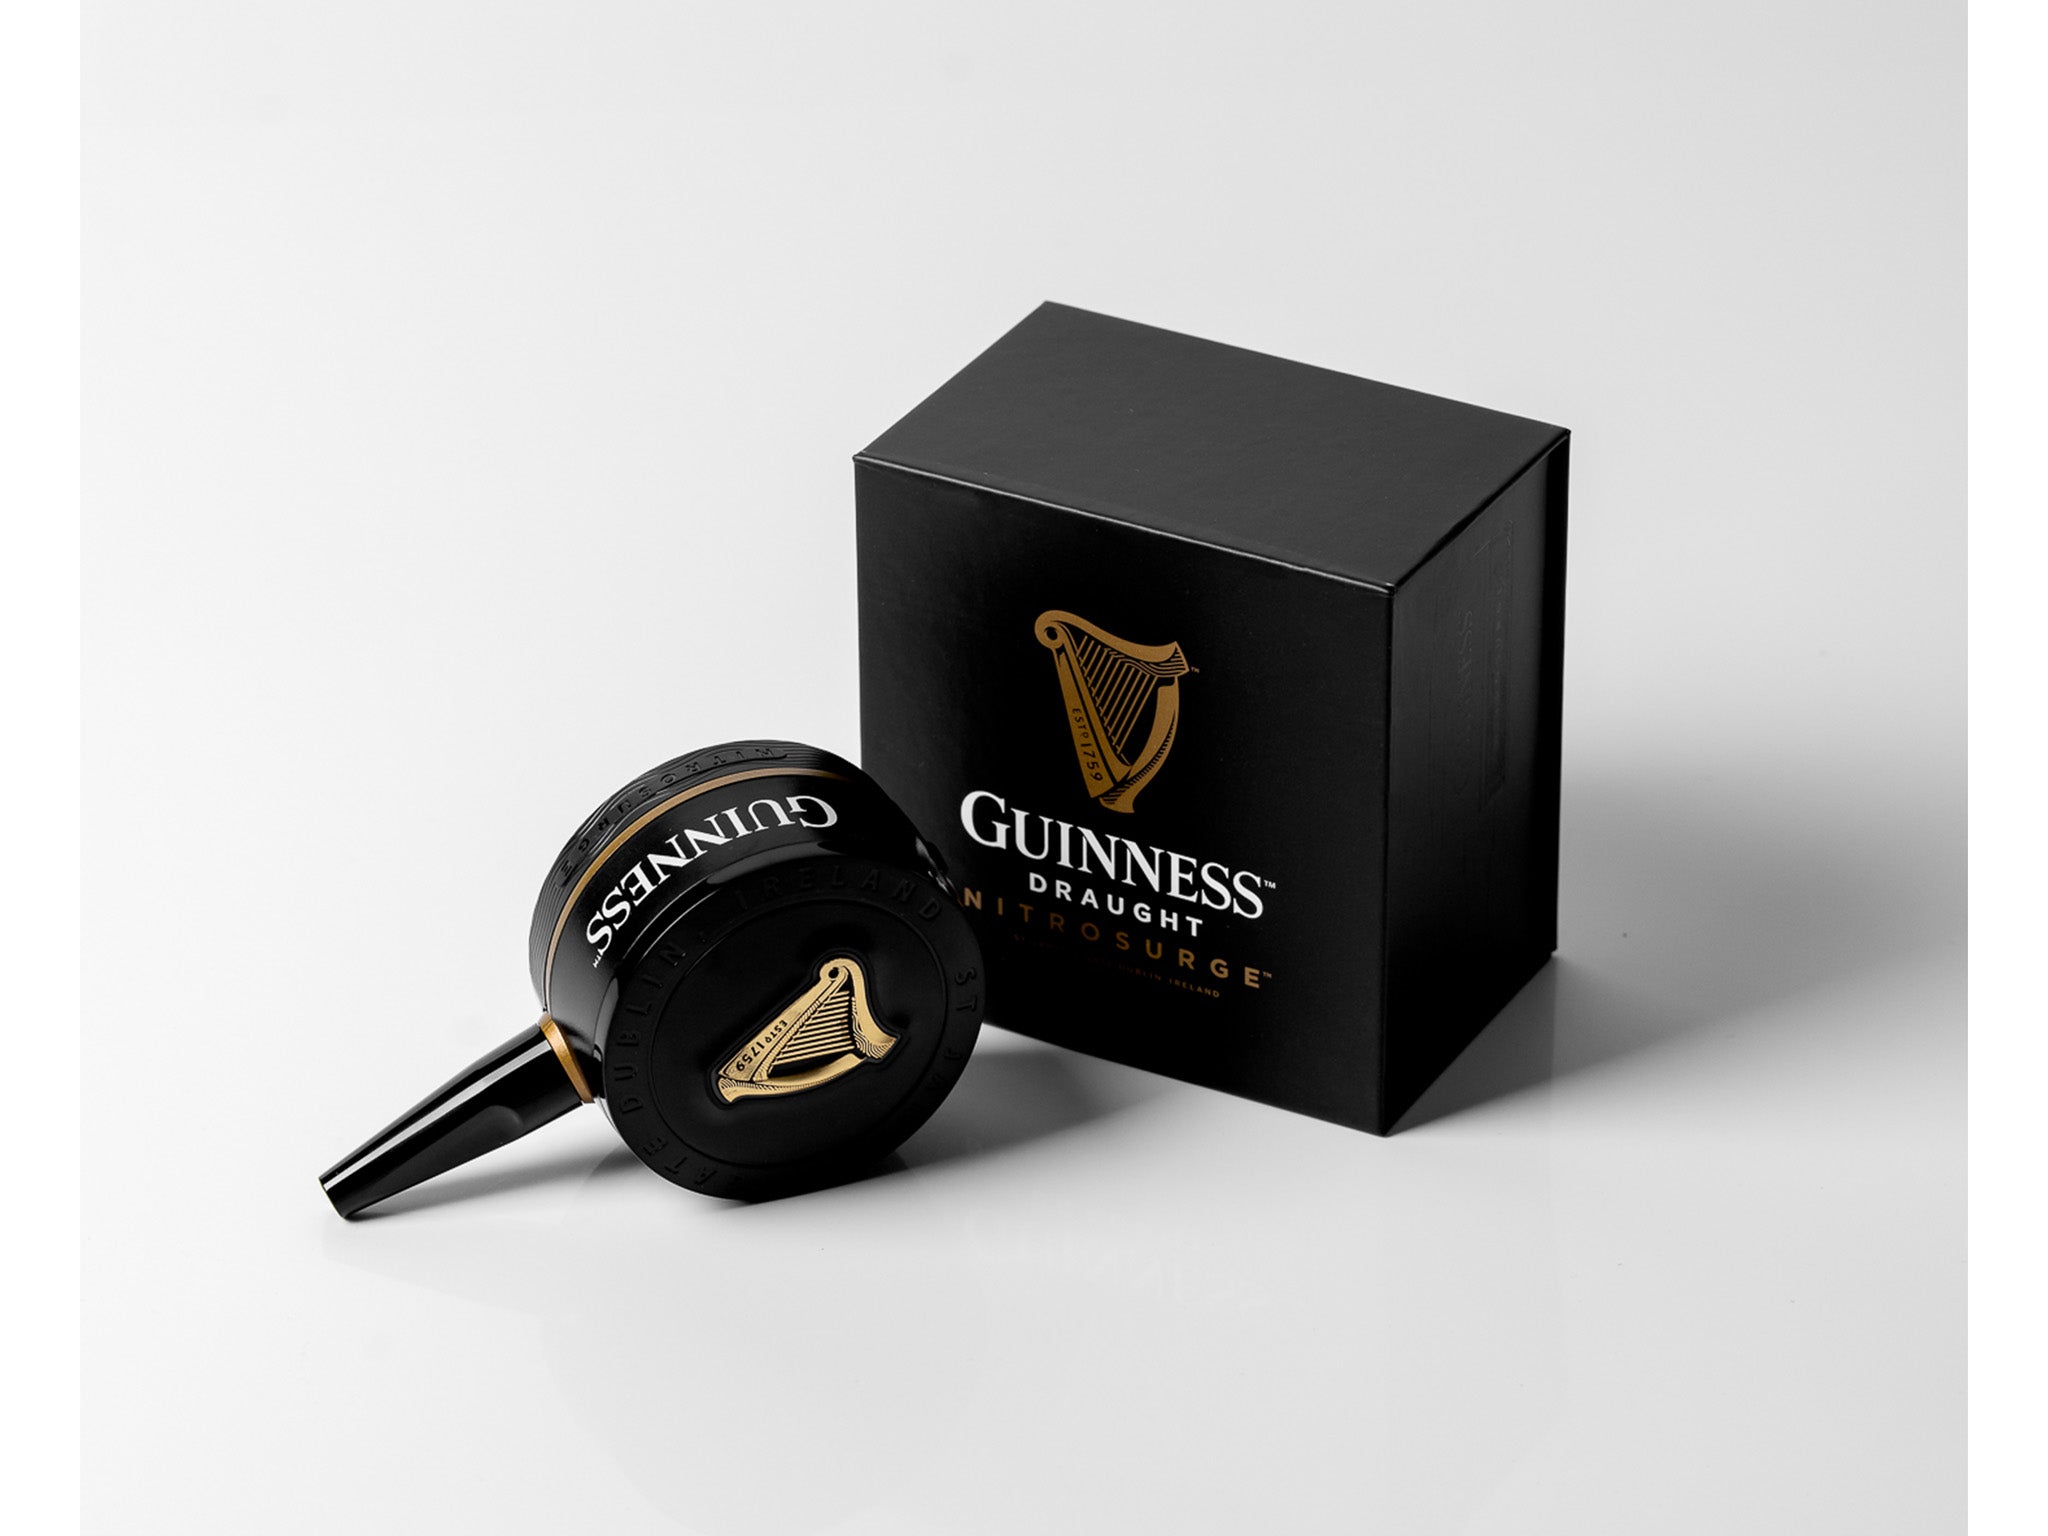 Guinness draught Nitrosurge device